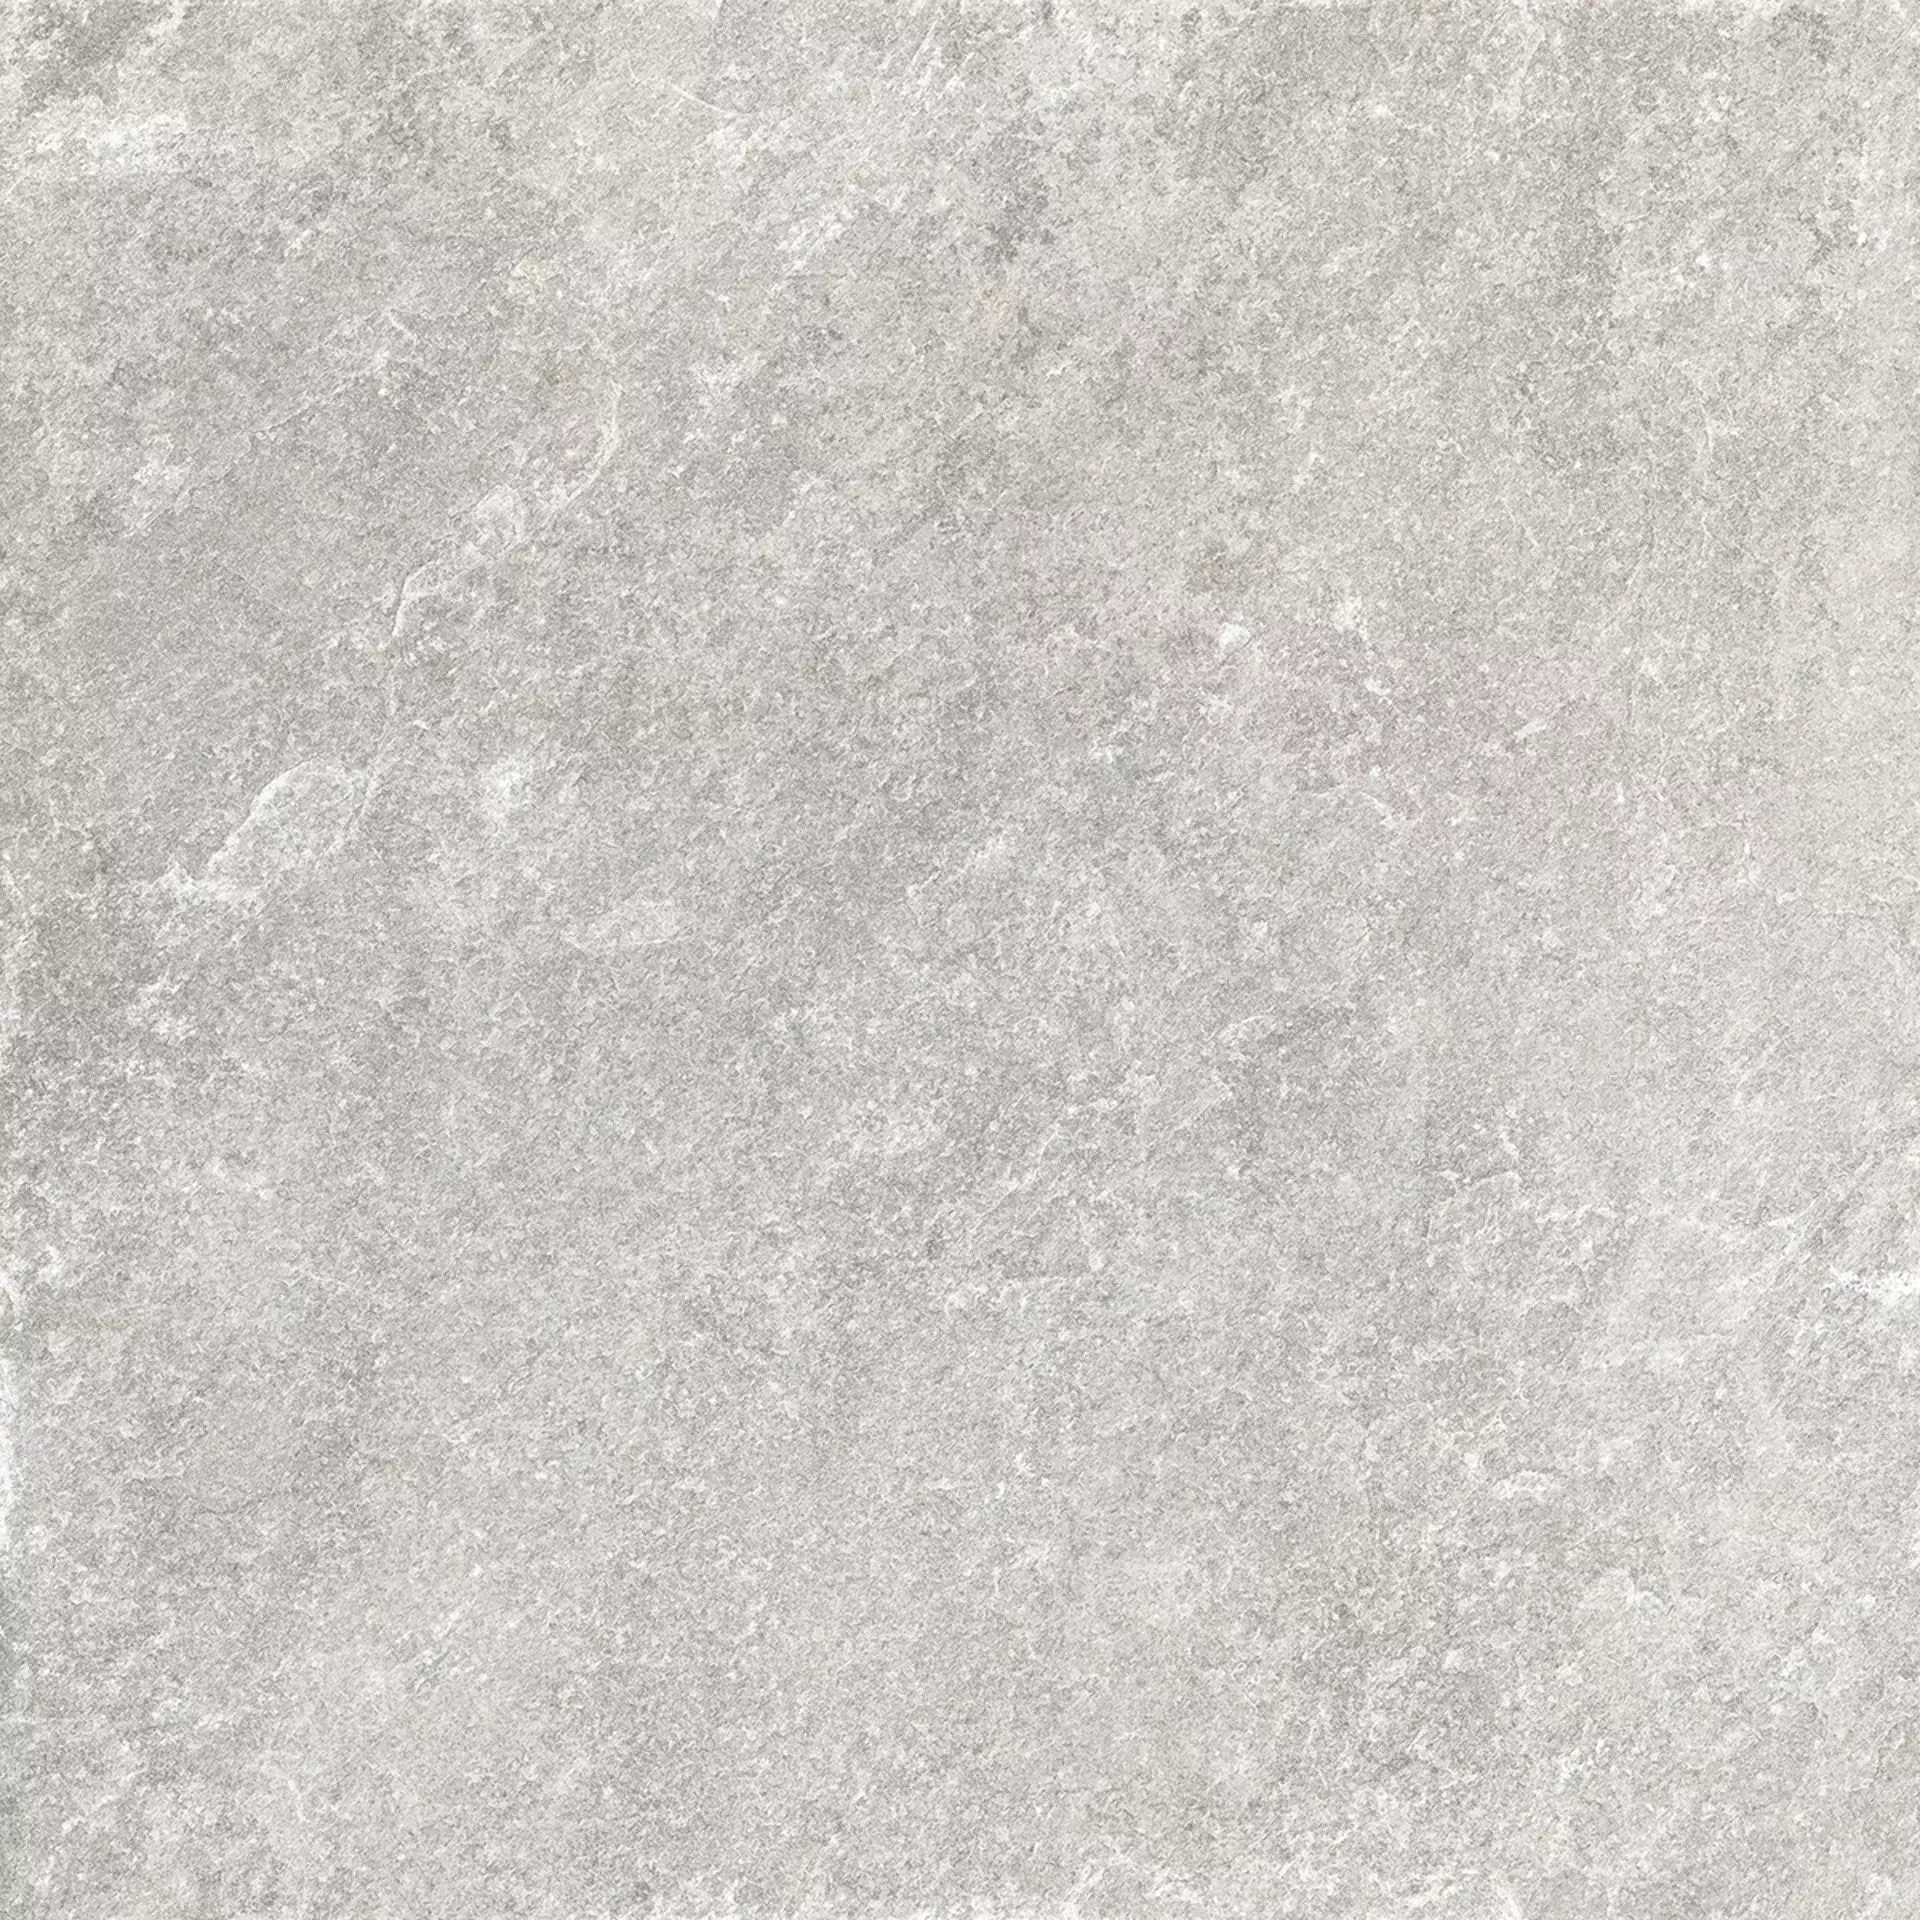 Rondine Quarzi Light Grey Naturale J87292 60x60cm rectified 9,5mm